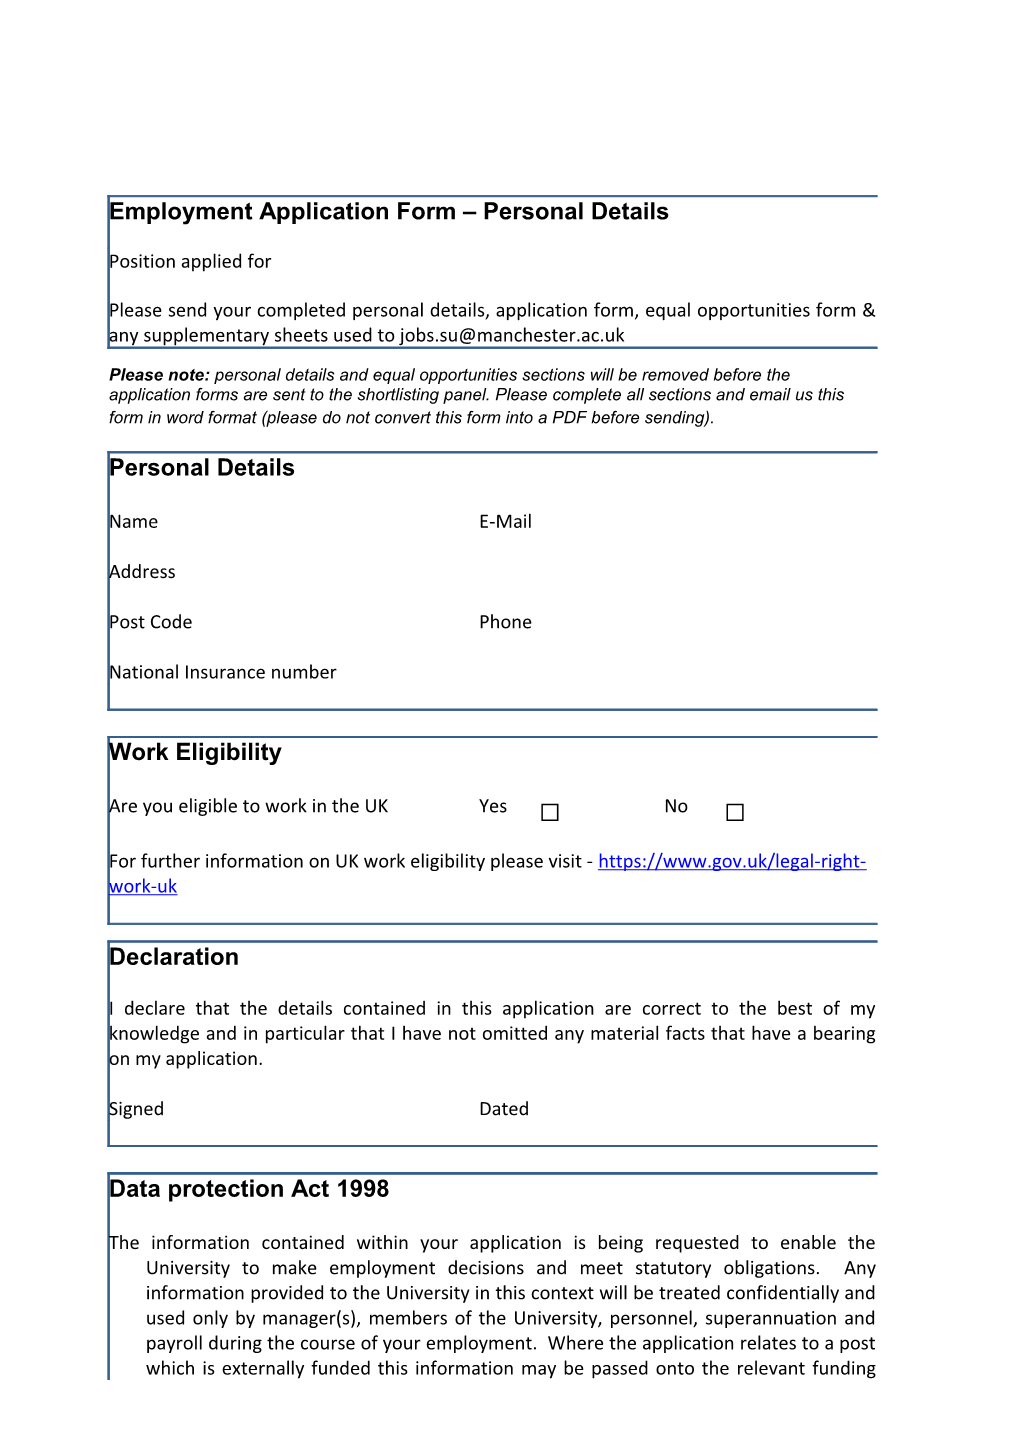 Employment Application Form Application Details